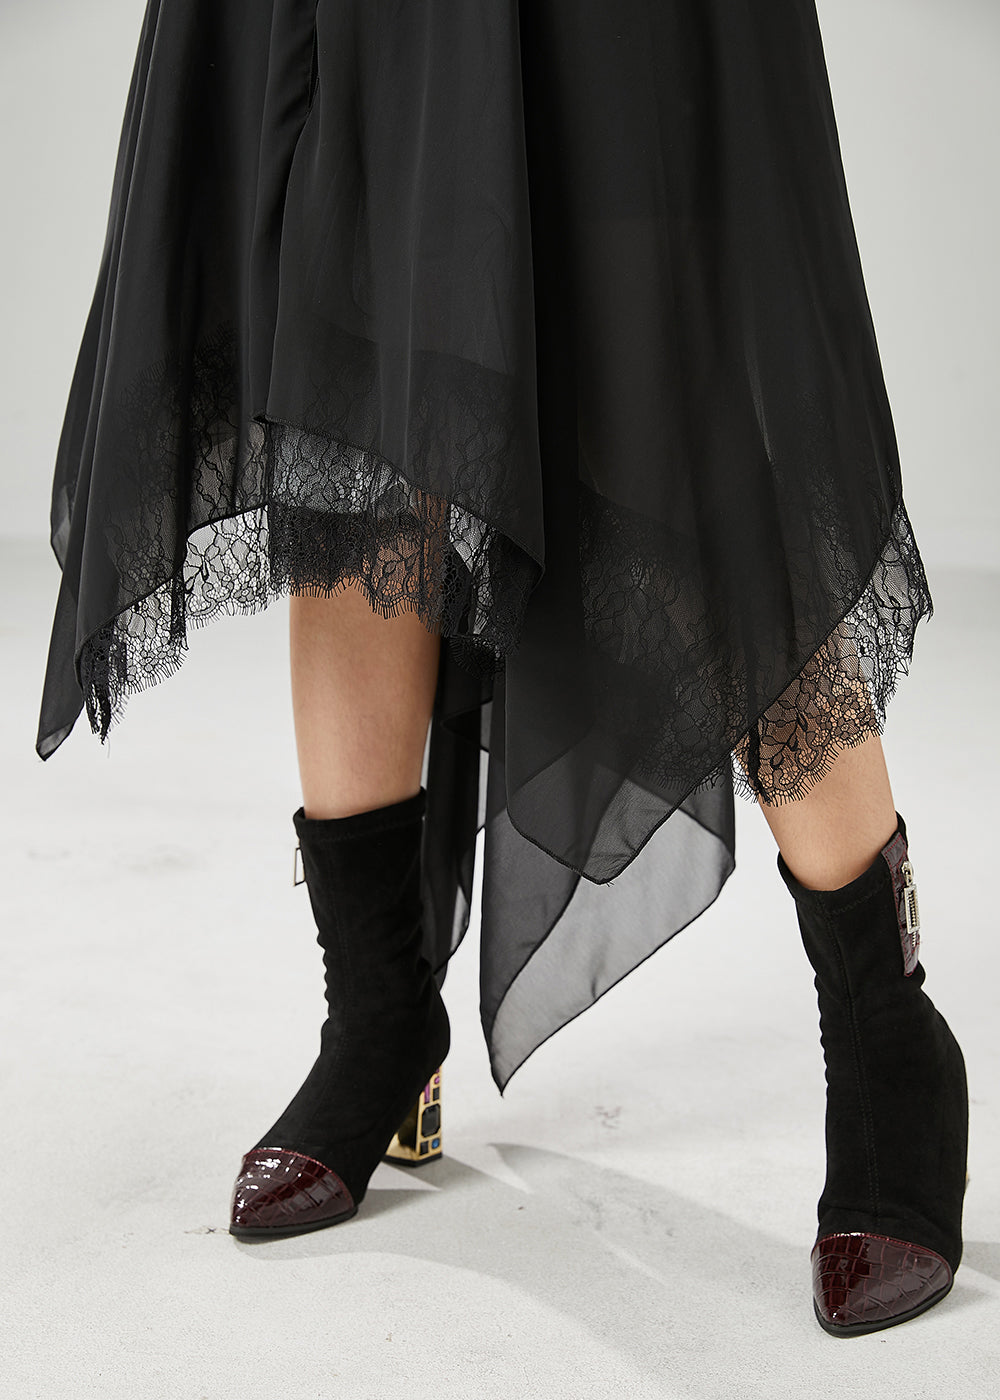 Fashion Black Asymmetrical Chiffon Holiday Skirts Summer